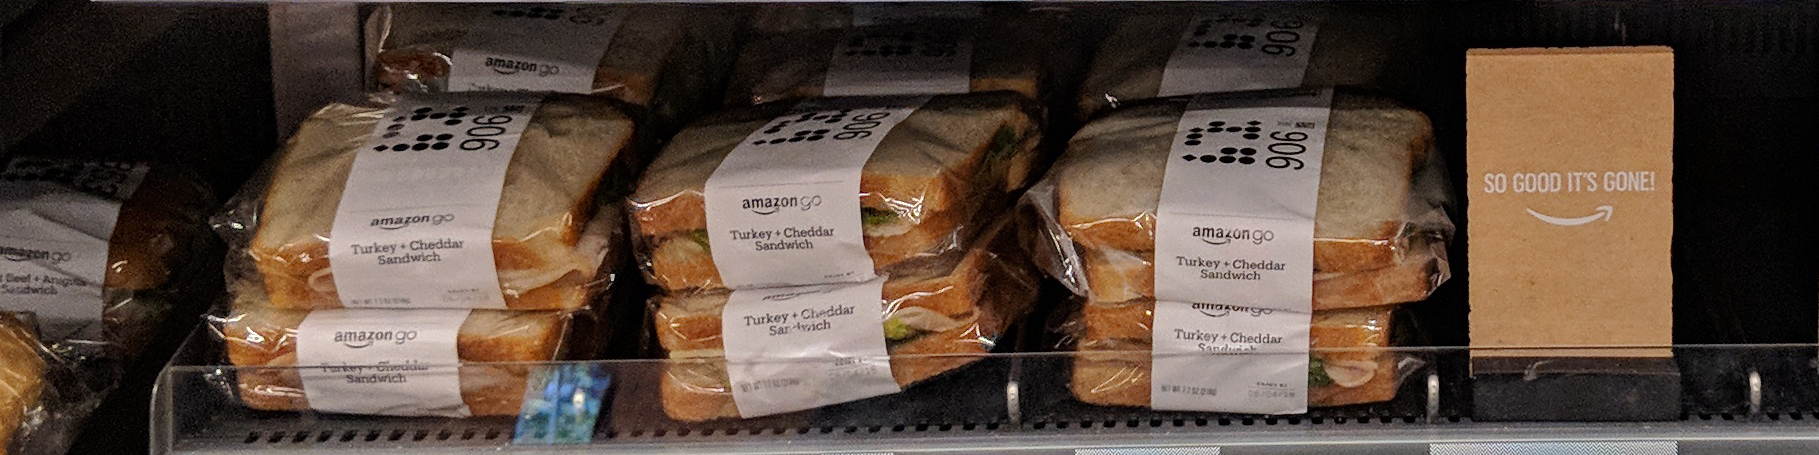 Photo within an Amazon Go store